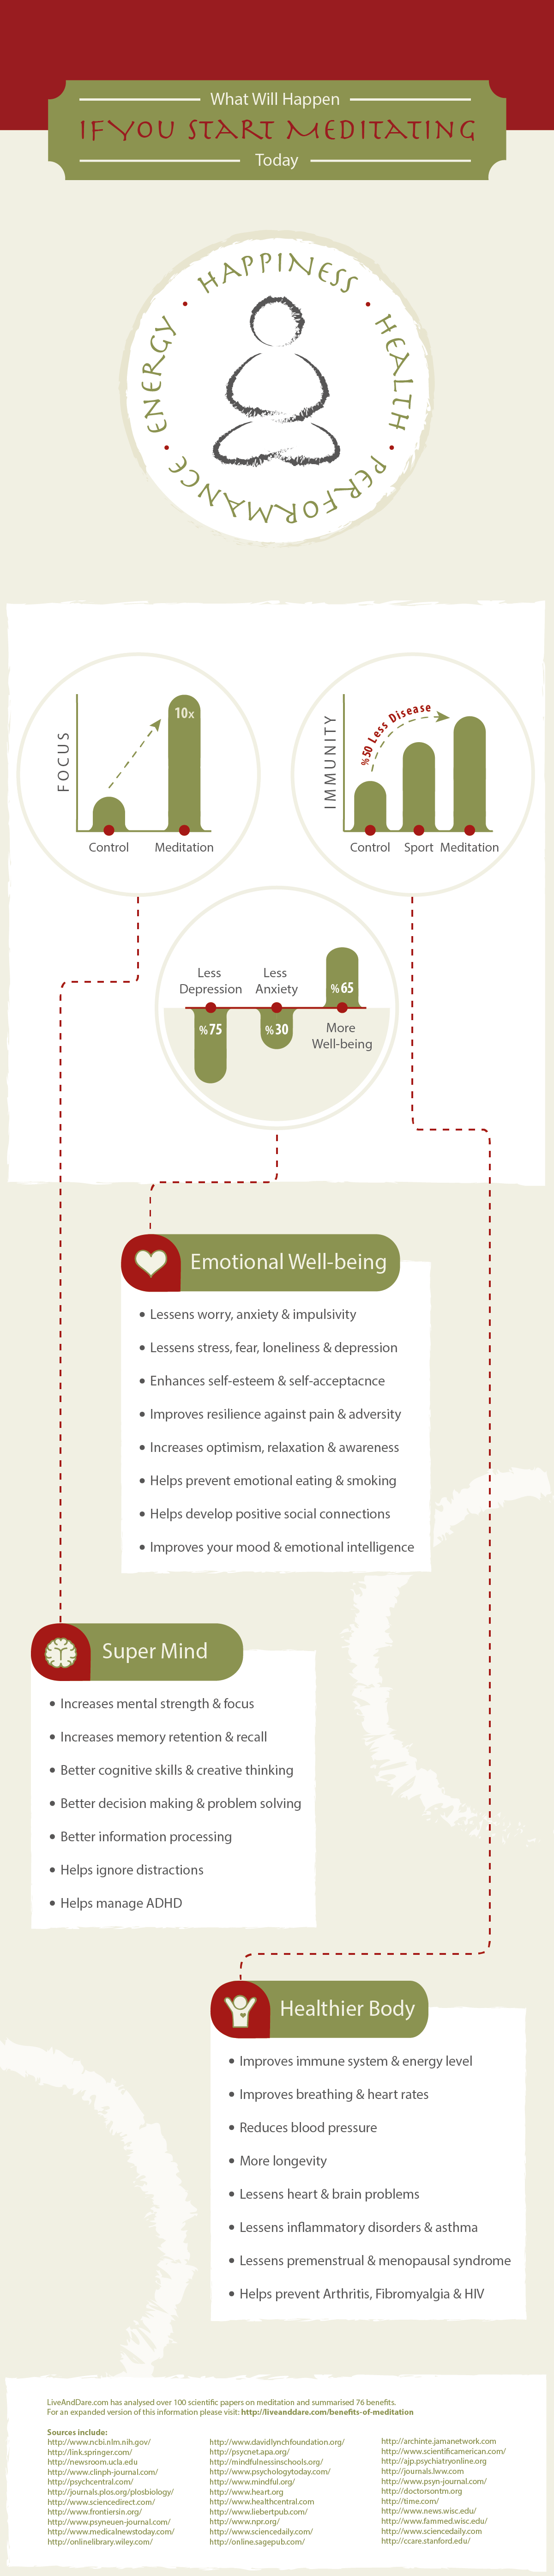 Benefits-of-Meditation-Infographic